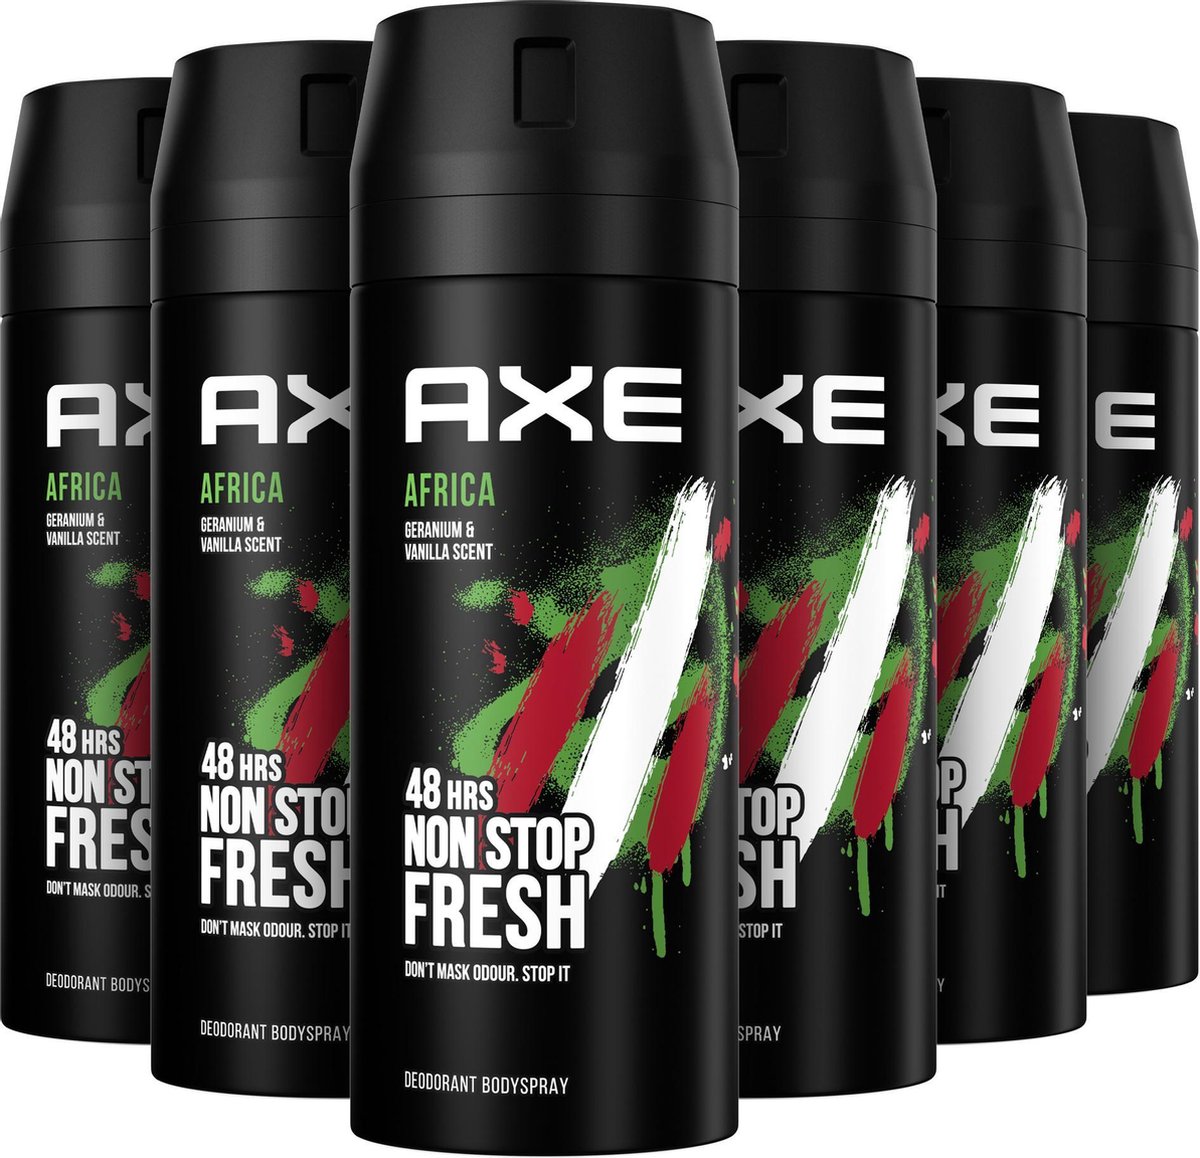 Déodorant Bodyspray Axe Africa - 6 x 150 ml - Pack économique | bol.com